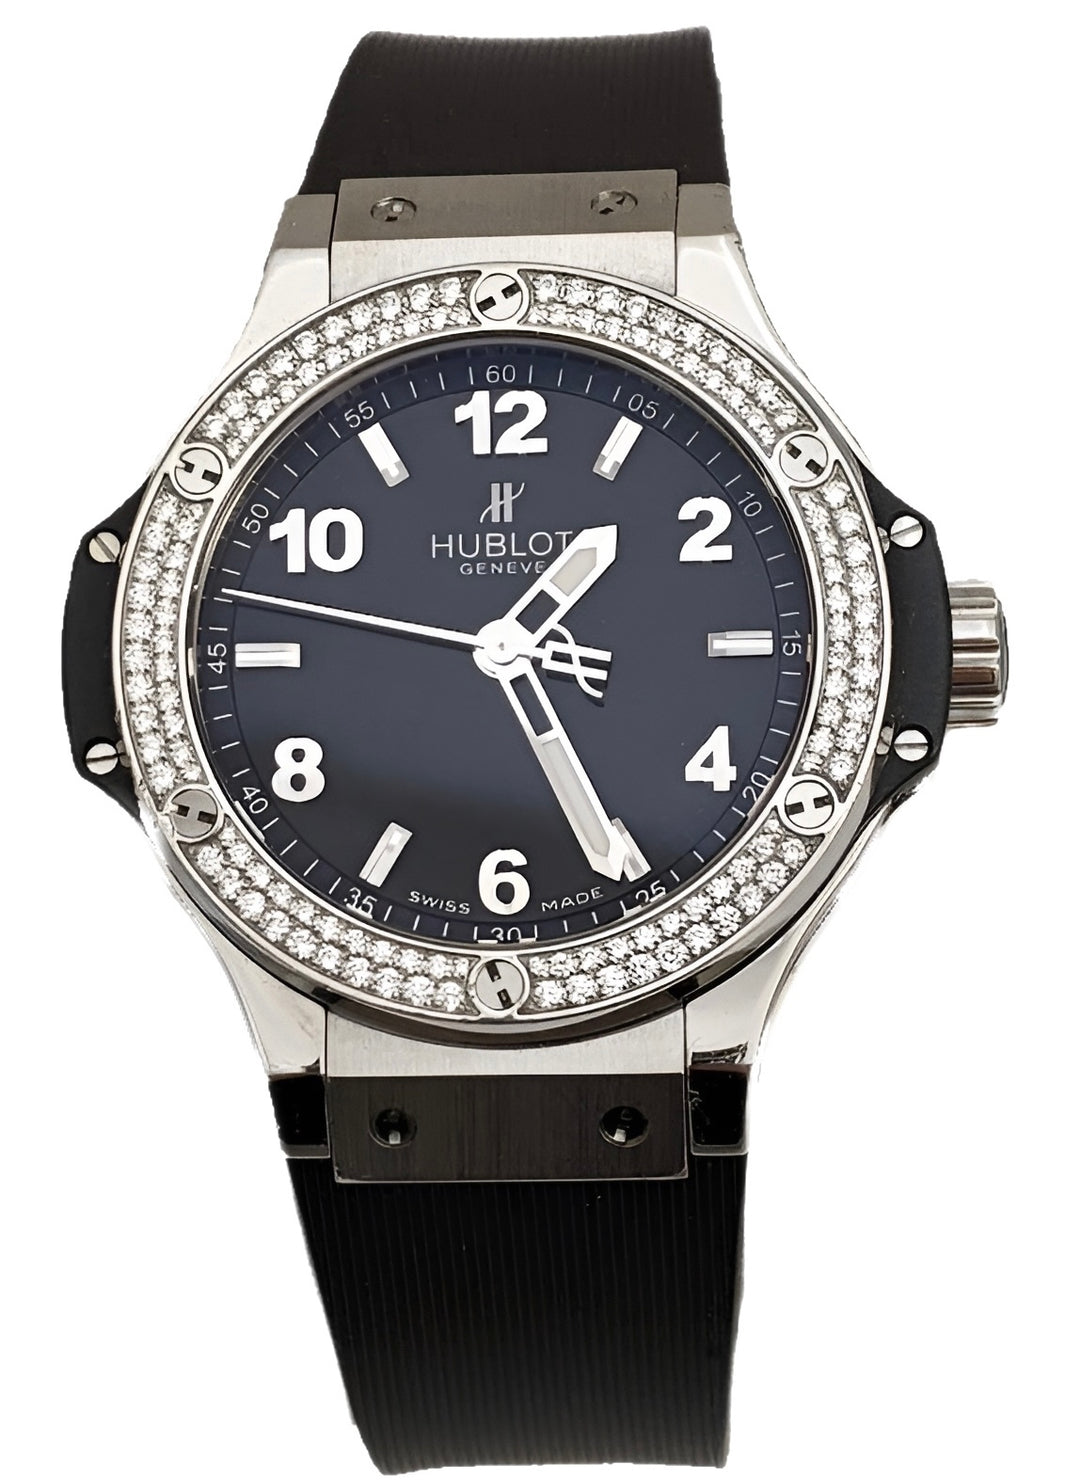 Hublot Big Bang Watch with diamond Bezel